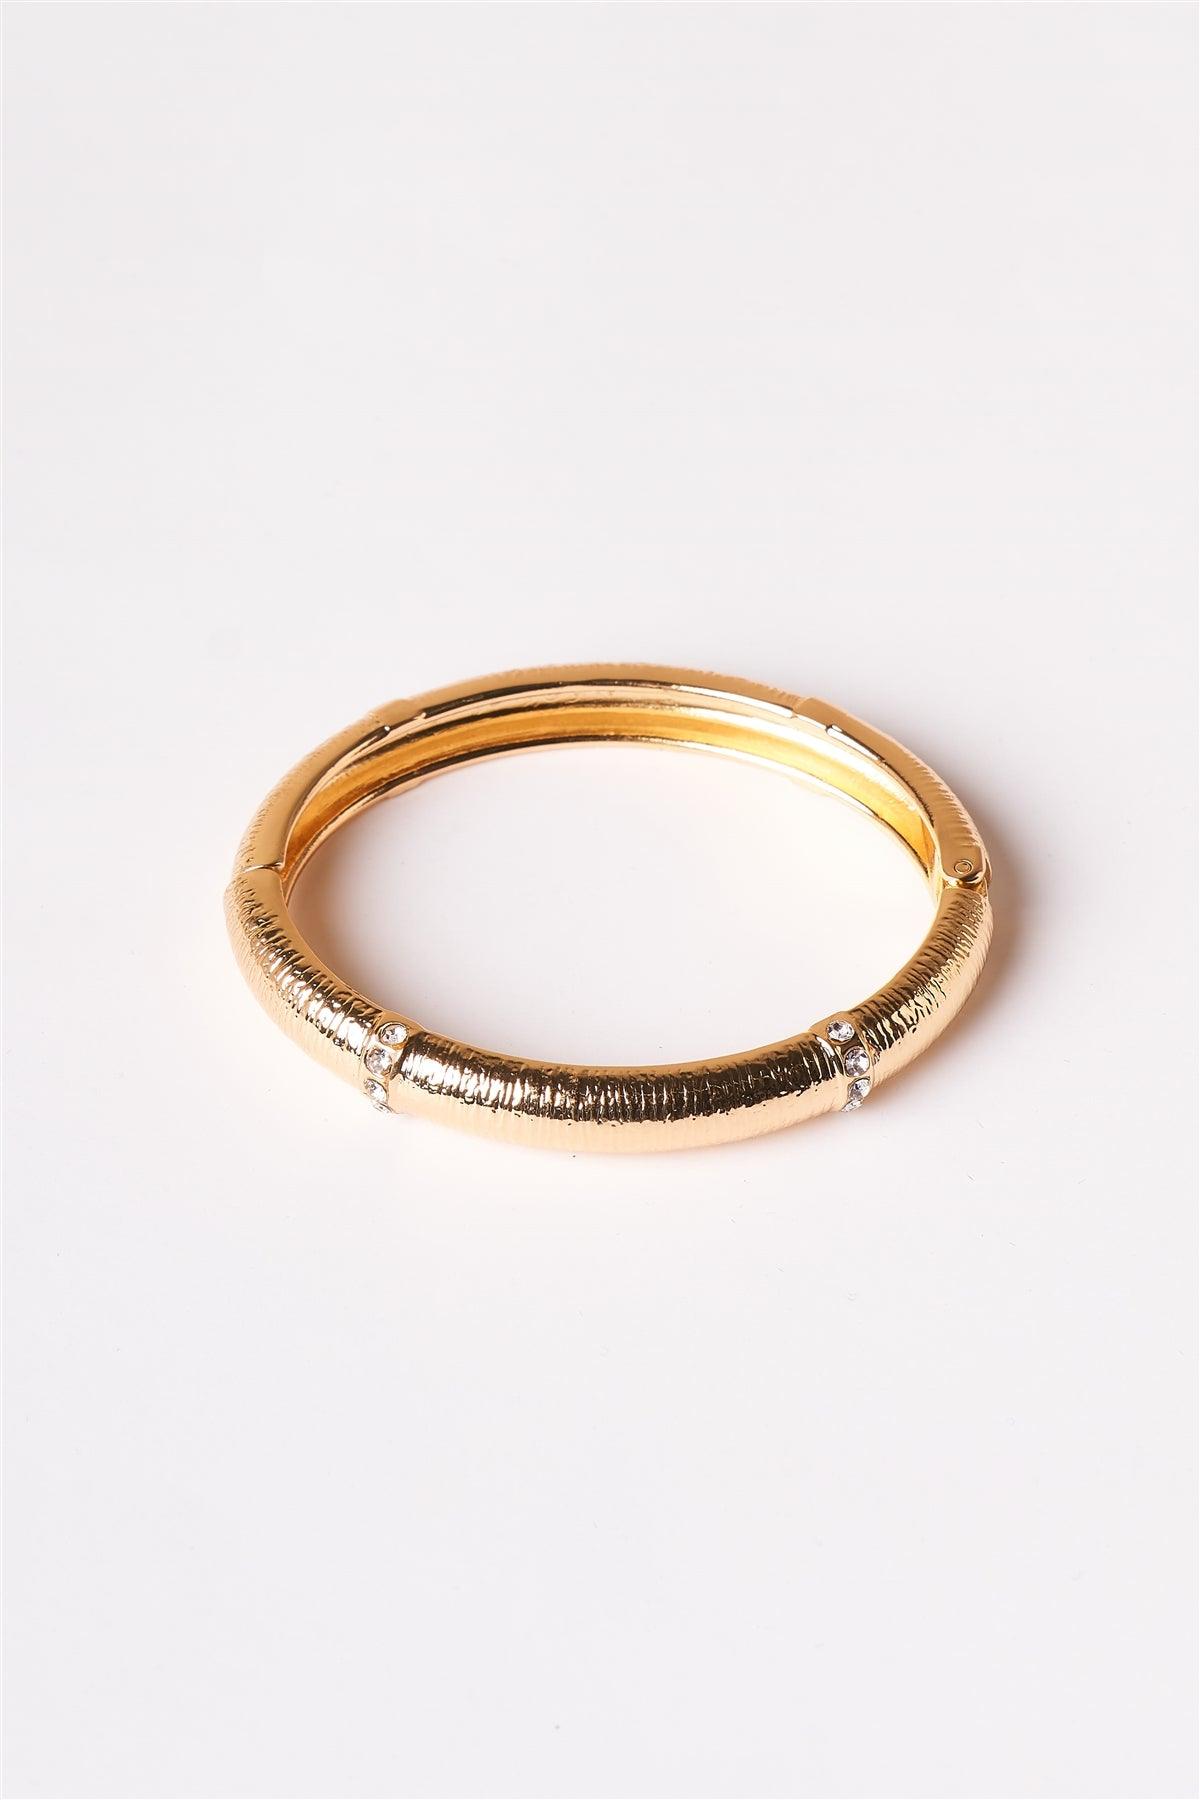 Gold Textured Metal Bangle Bracelet /6 Pieces